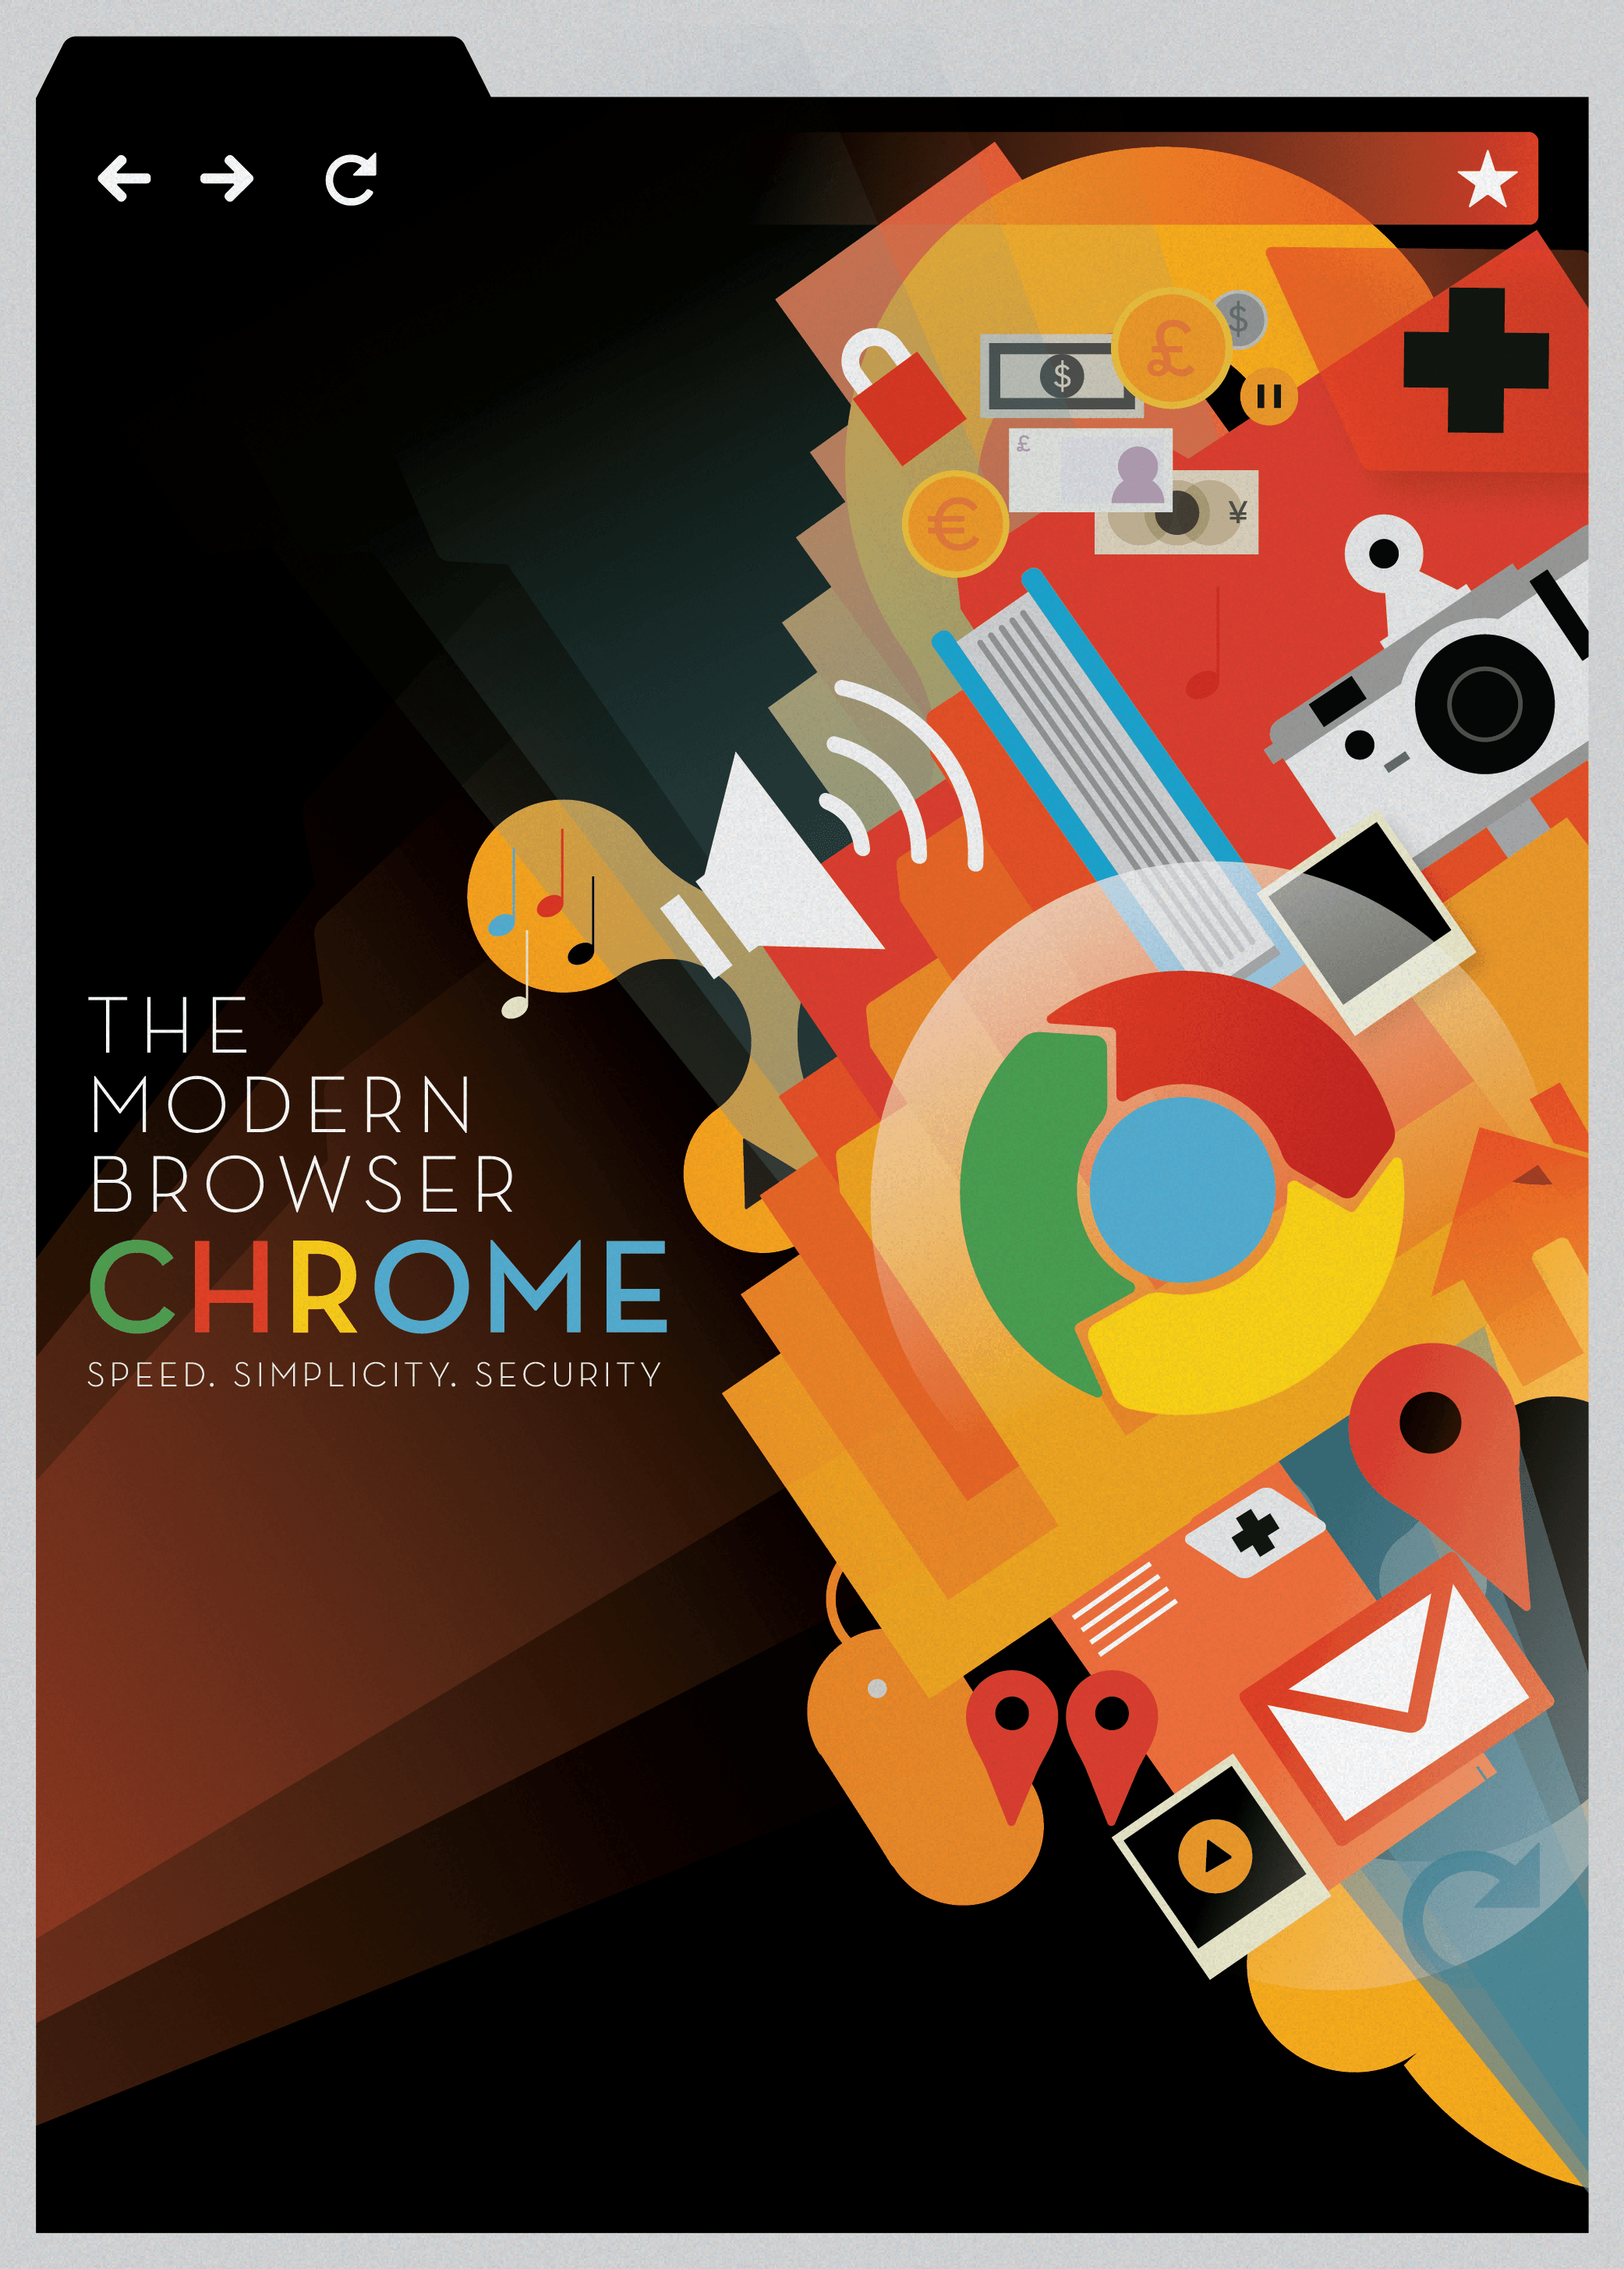 Original Google Chrome Logo - Google Chrome Blog: Back to the future: two years of Google Chrome